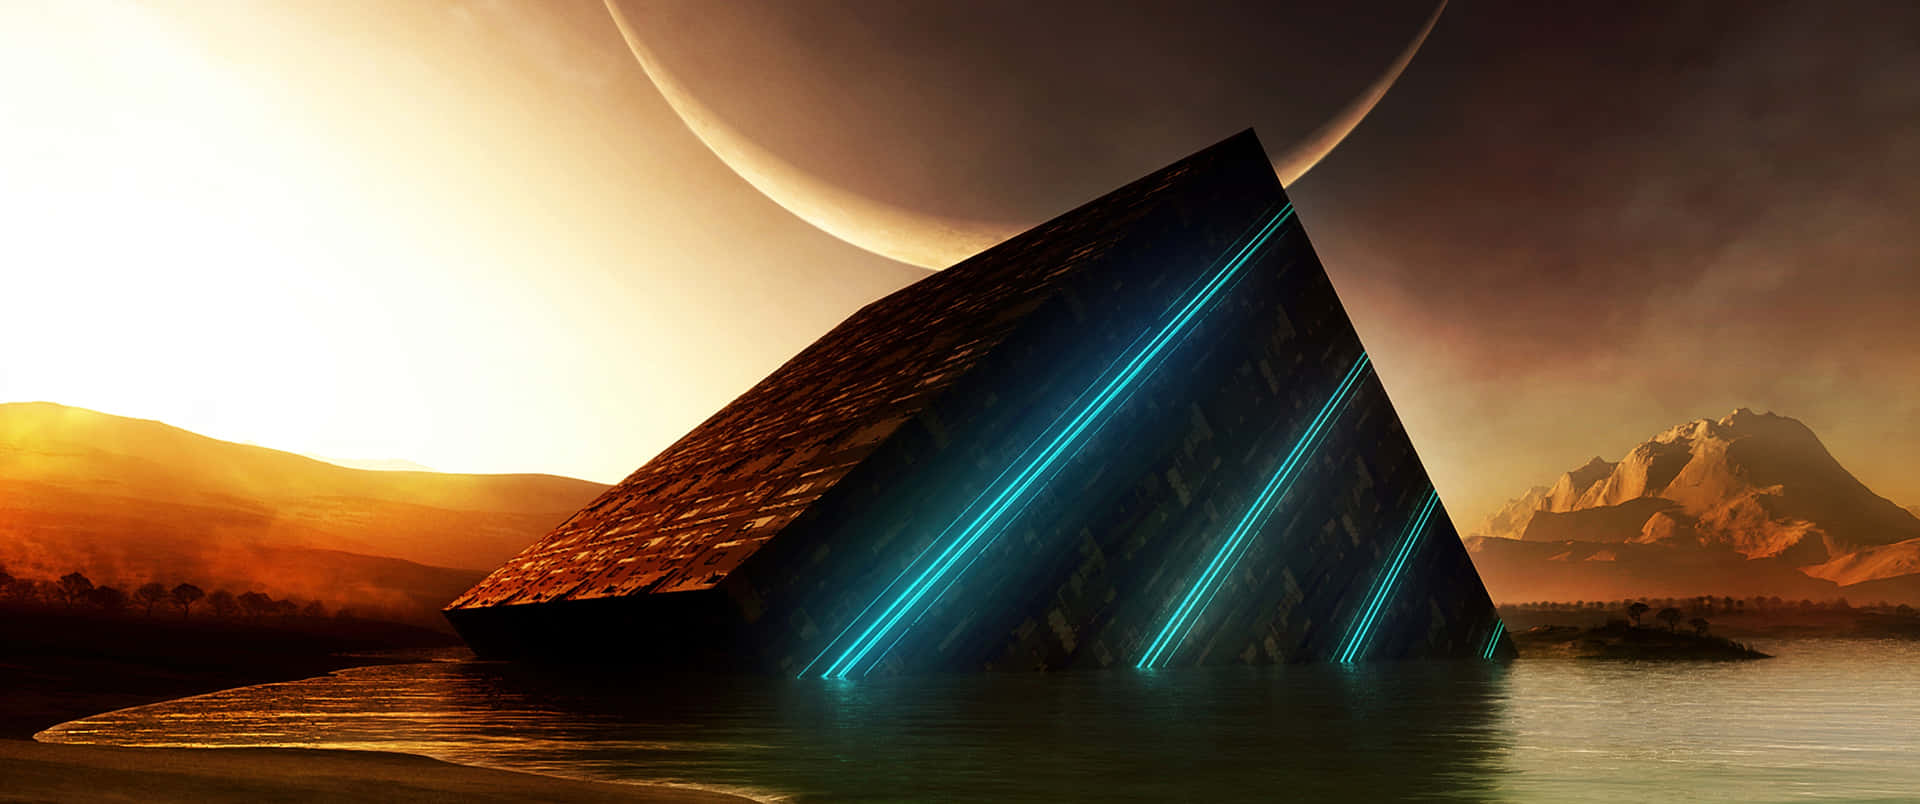 Pyramid Of The Moon Neon Wallpaper